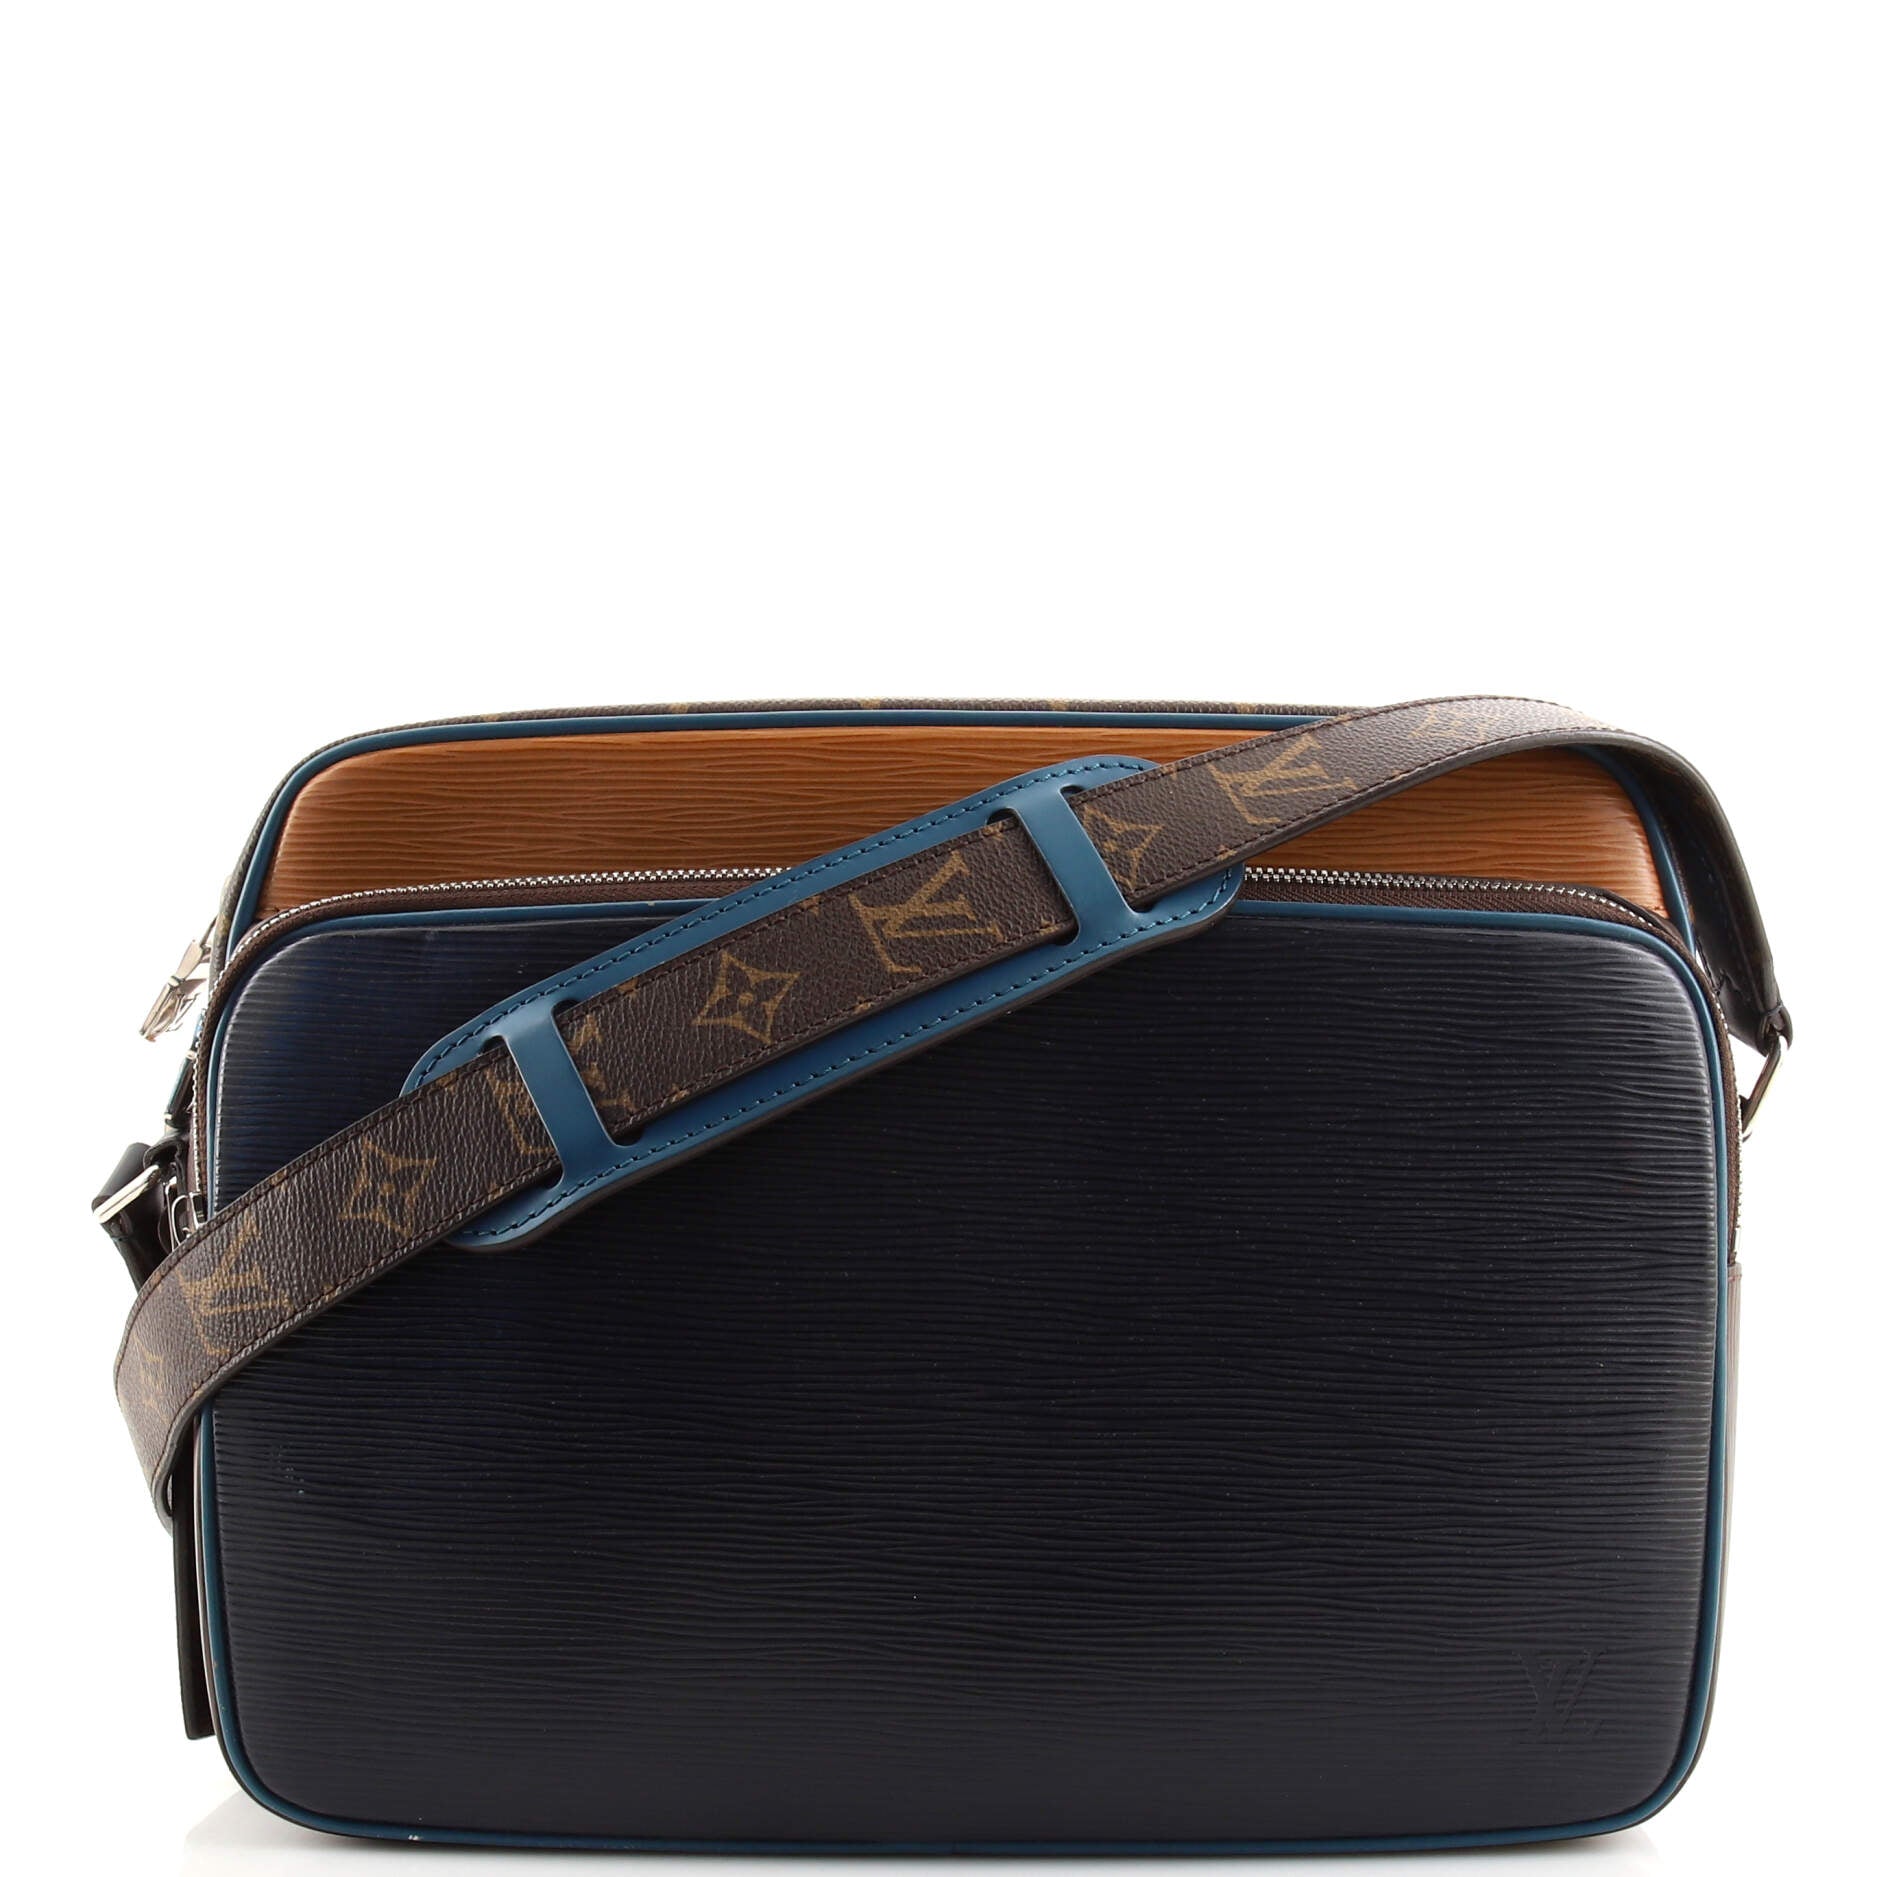 Alpha messenger leather bag Louis Vuitton Multicolour in Leather